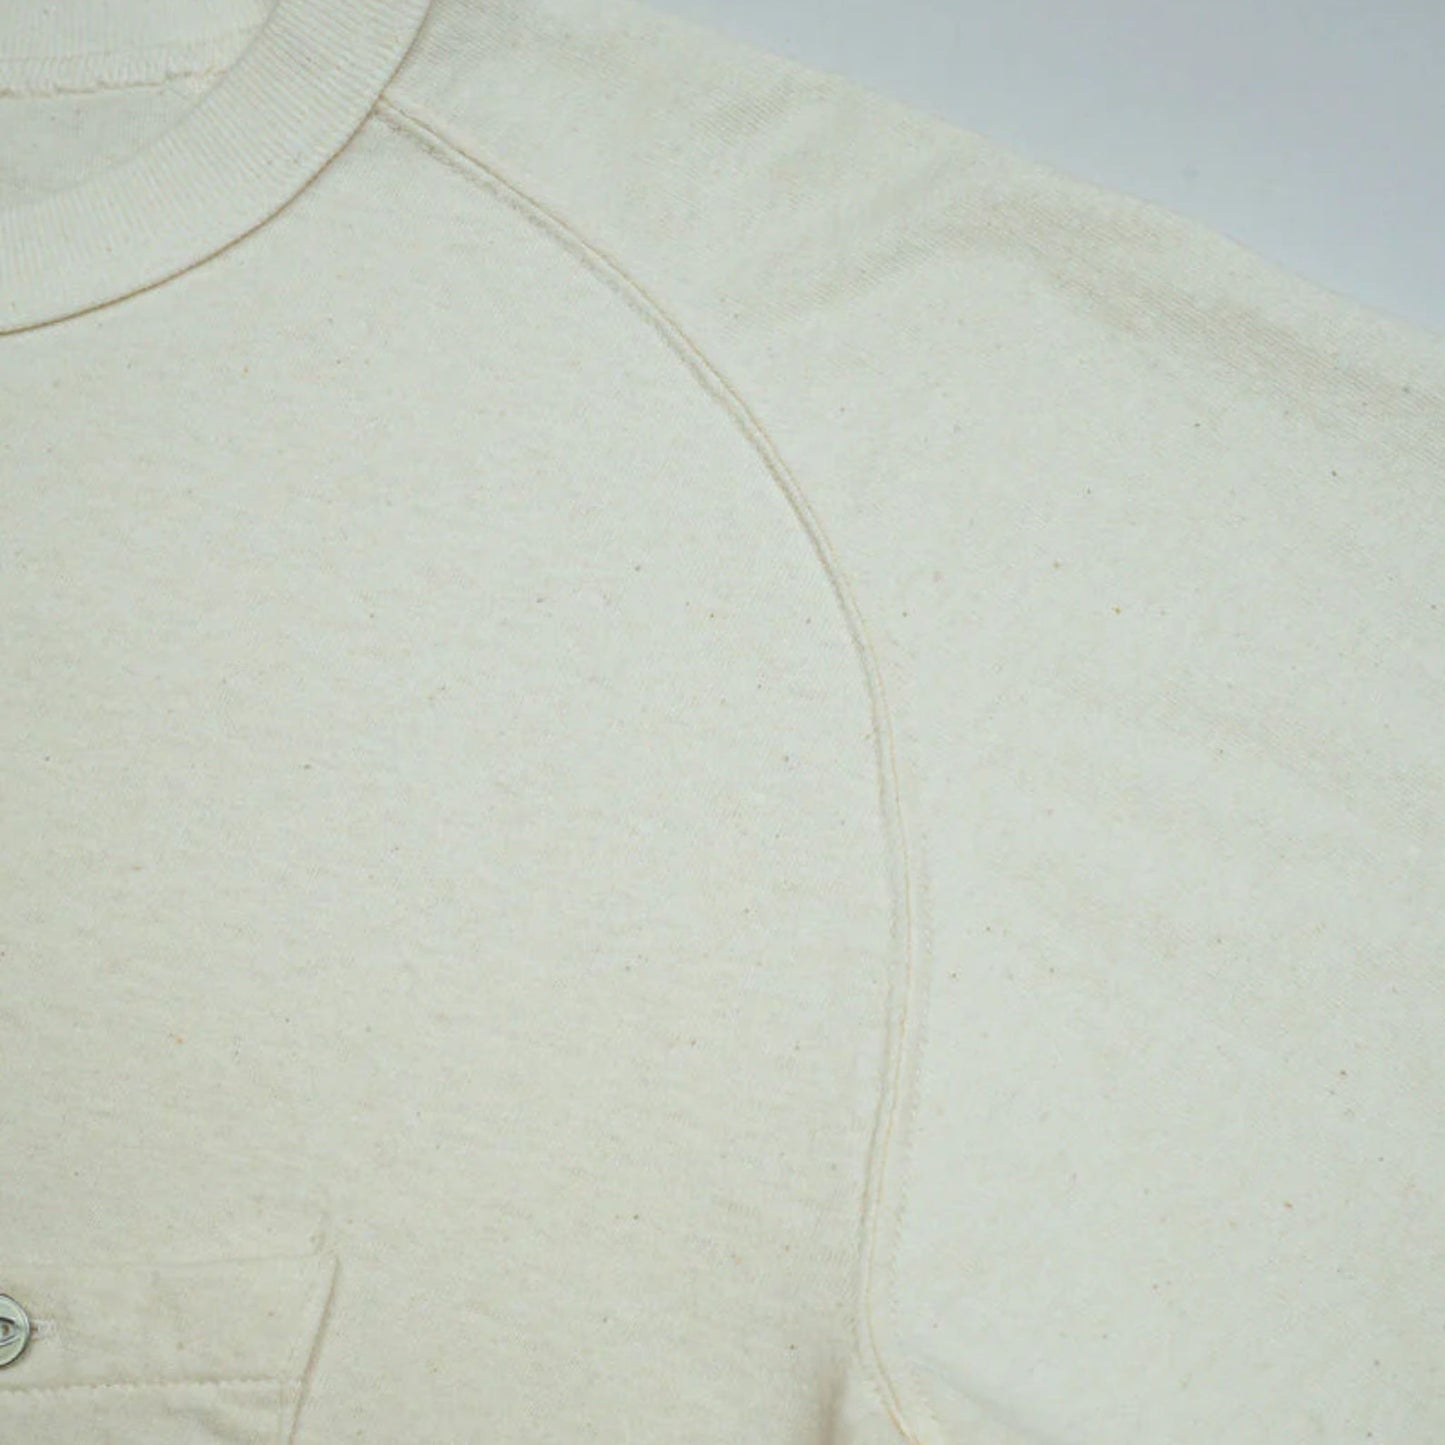 NIGEL CABOURN - 5.6oz Basic T-shirt Off White